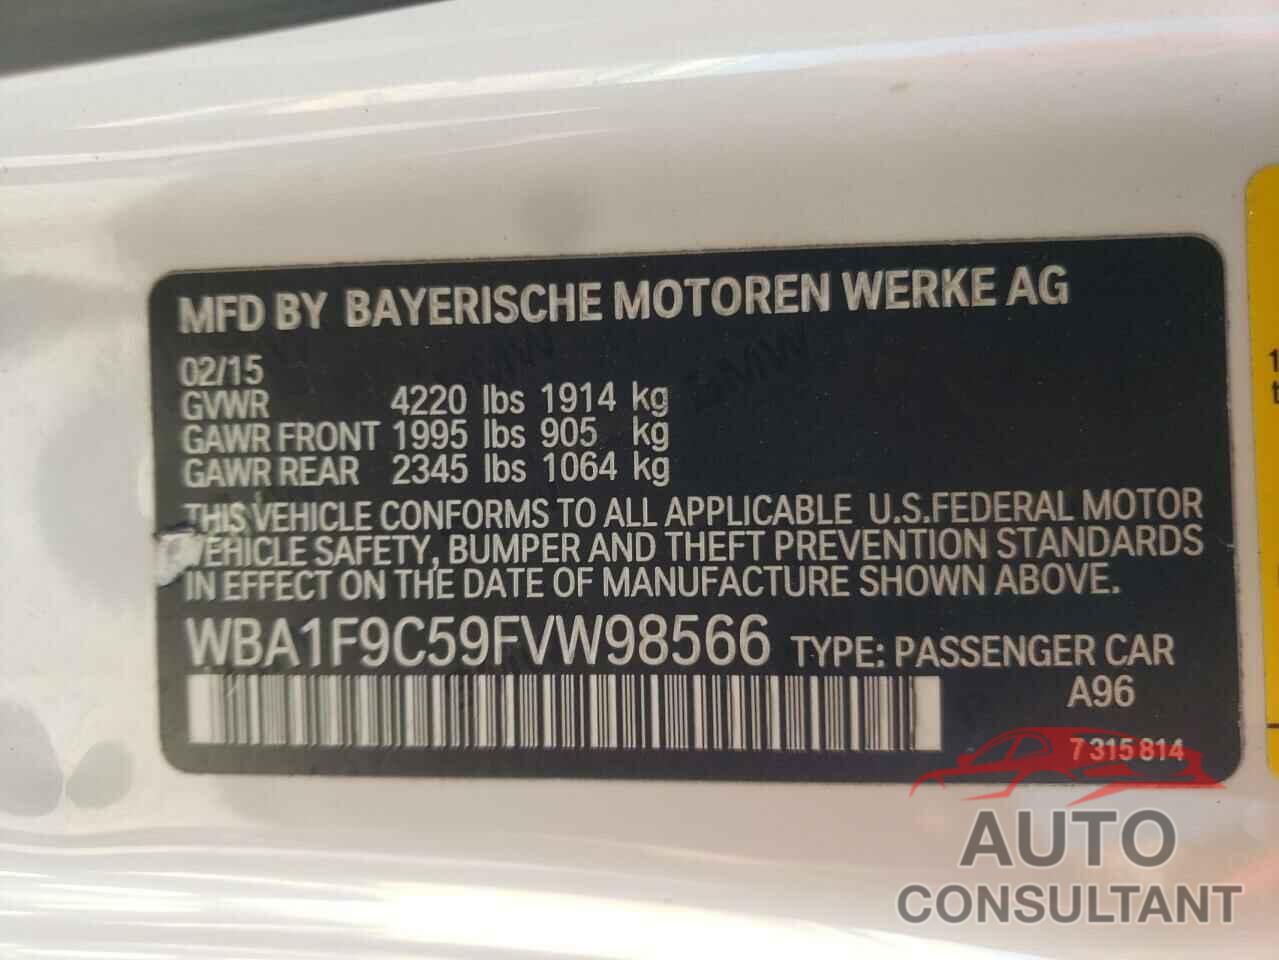 BMW 2 SERIES 2015 - WBA1F9C59FVW98566